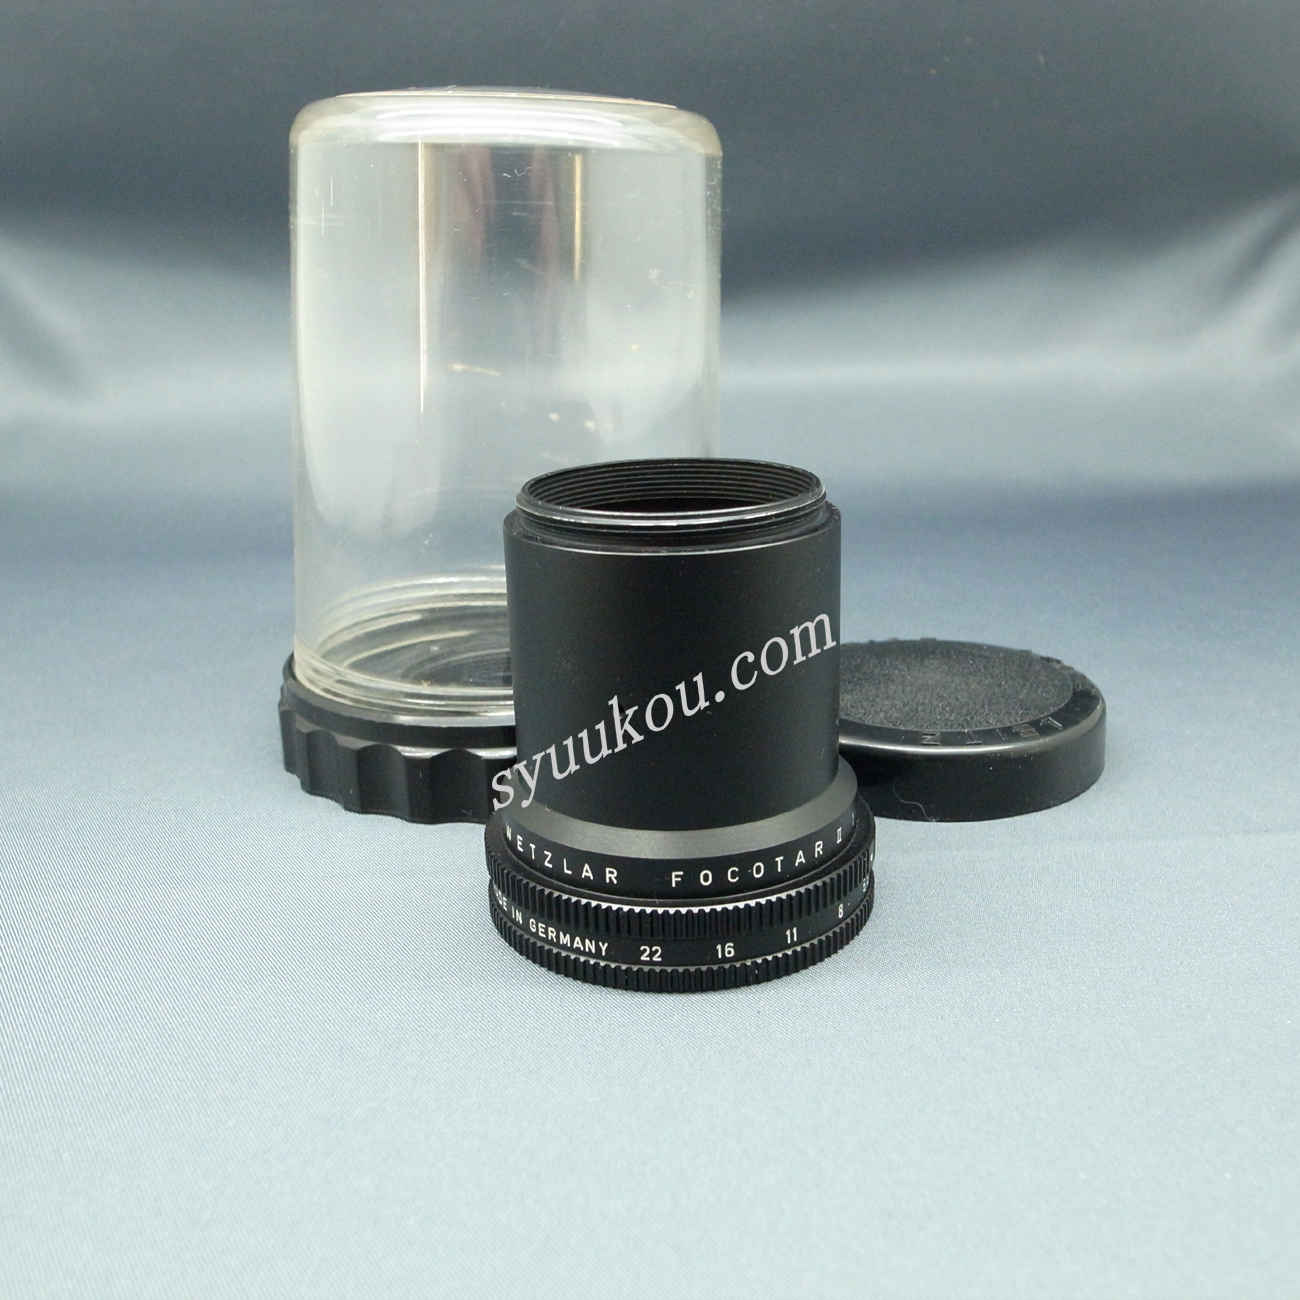 LEITZ FOCOTAR 40/2.8 フォコター【Leica】 - カメラ、光学機器